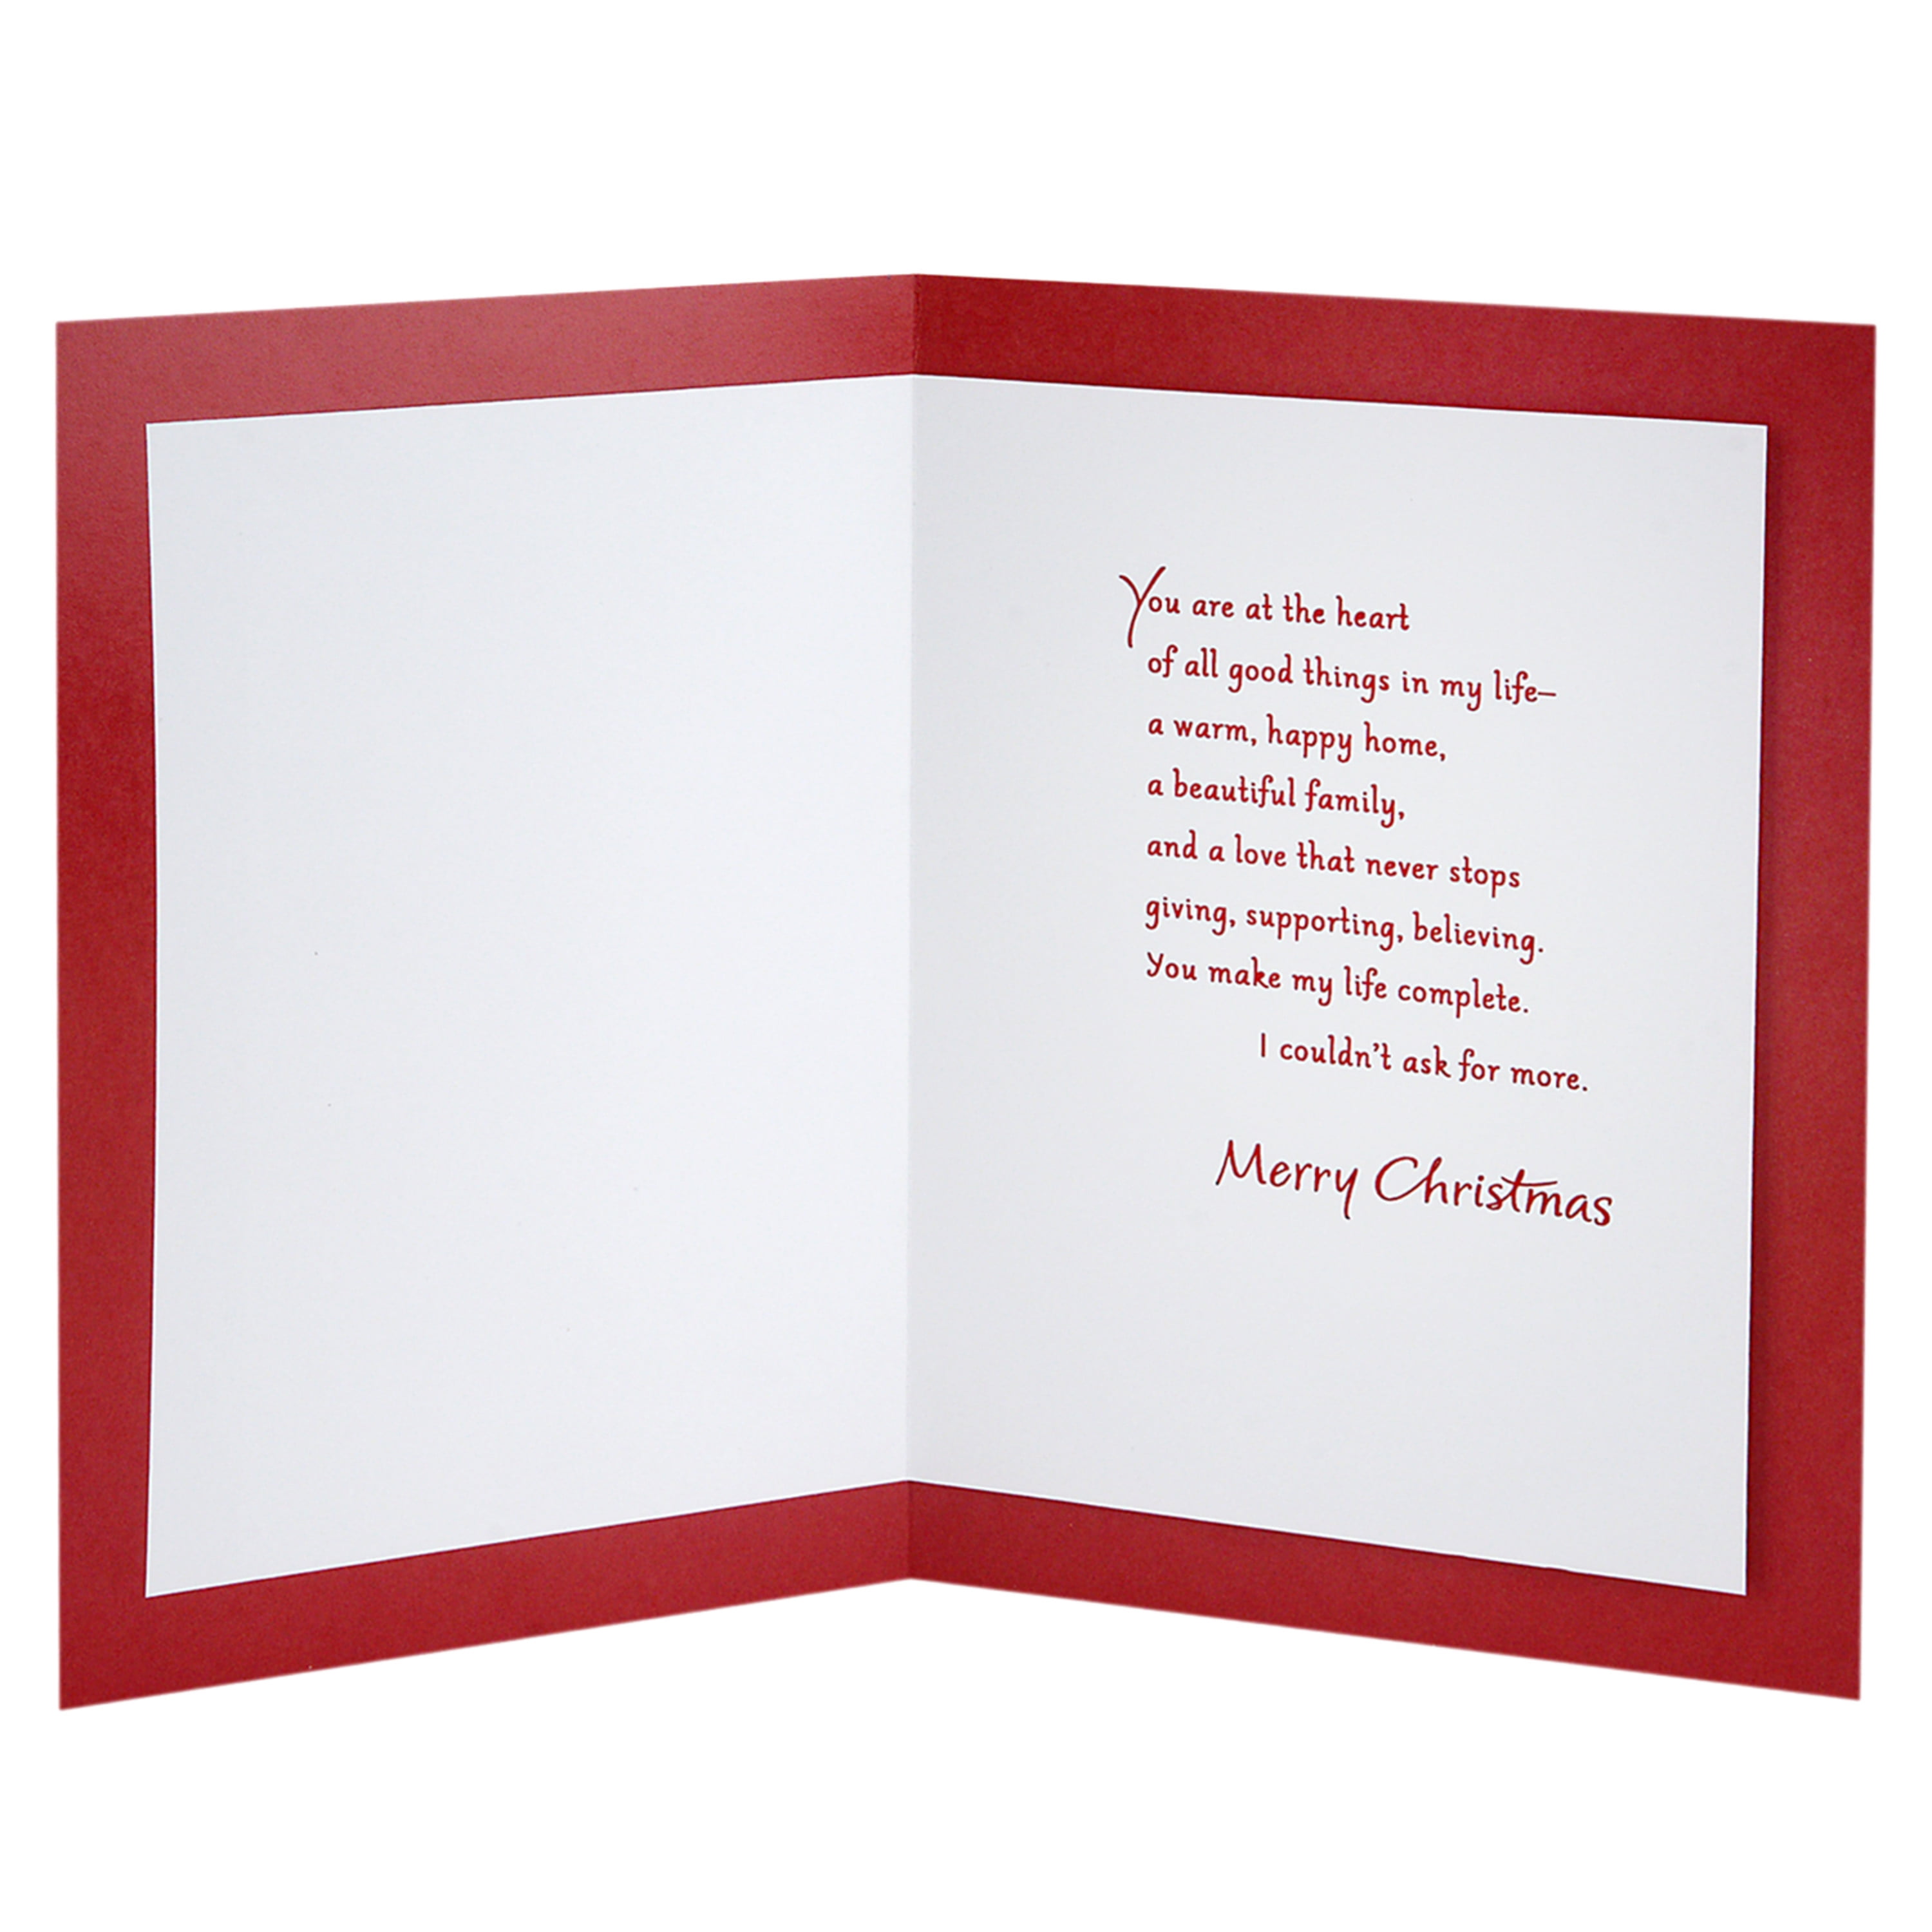 Heart of All Good Things Hallmark Christmas Card for Wife 